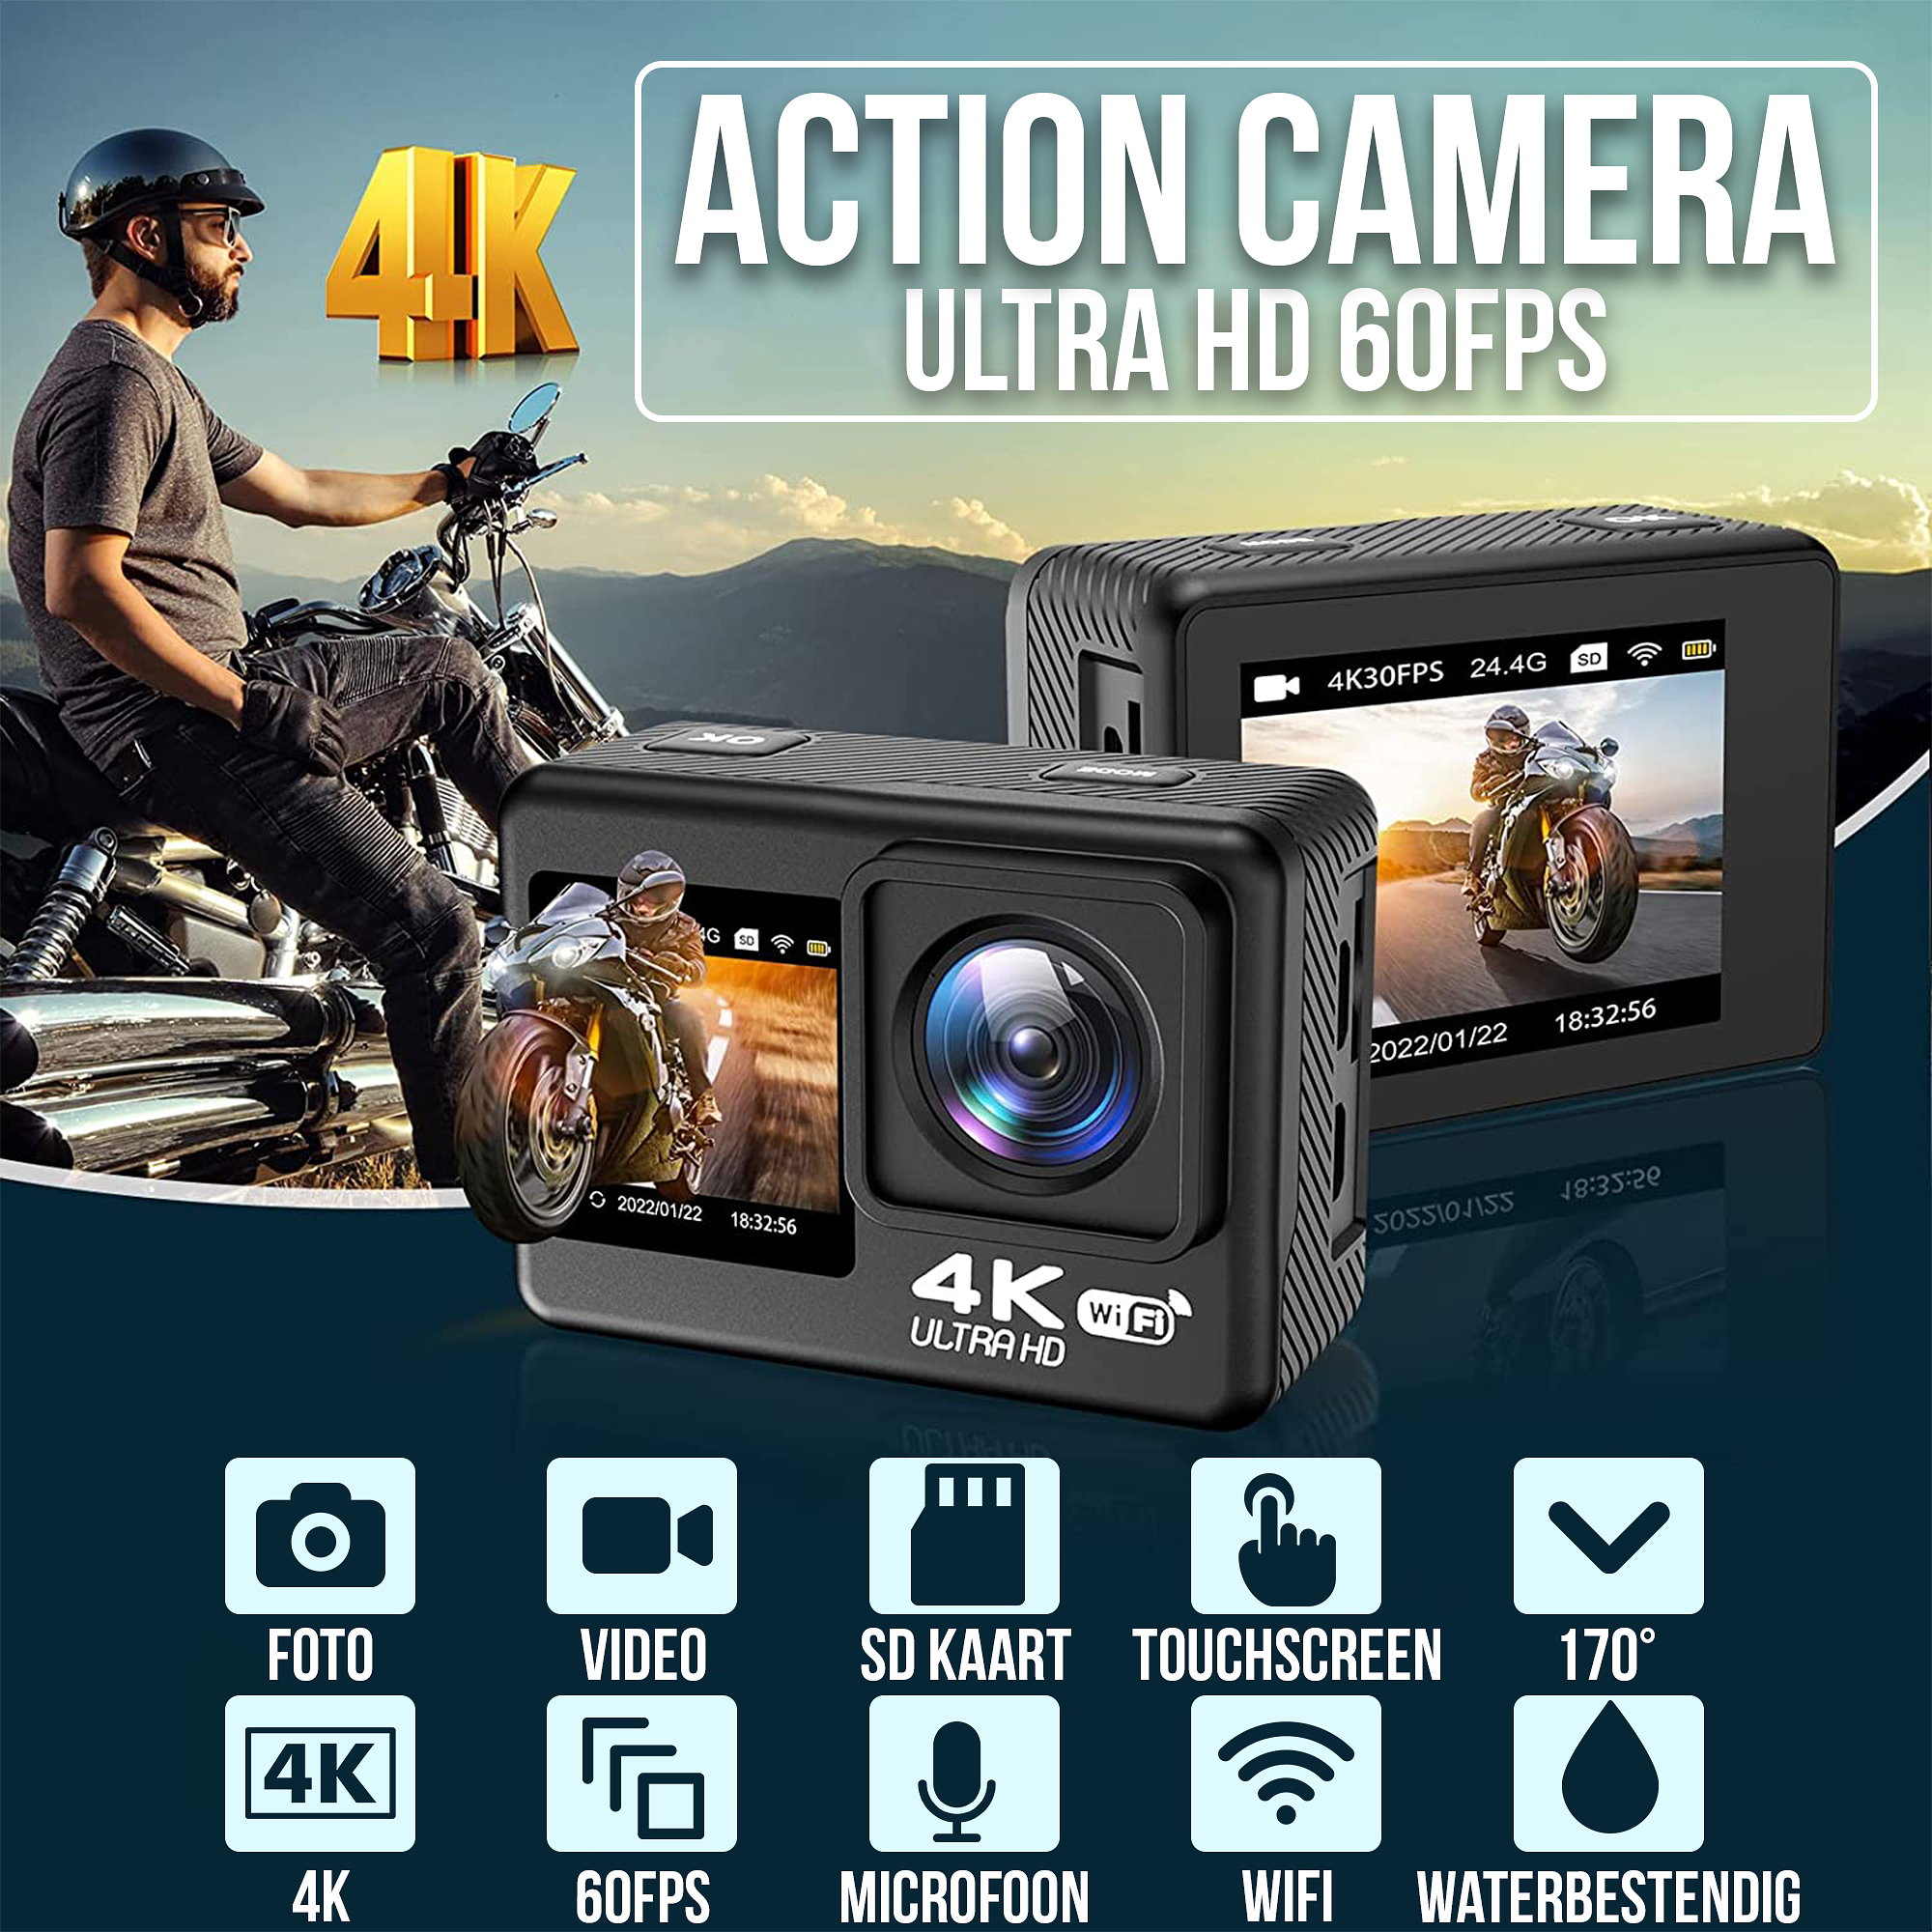 Strex Action Camera 4K 24MP - 60FPS / 30M Waterdicht / WiFi - Inclusief 20 accessoires - Actiecamera